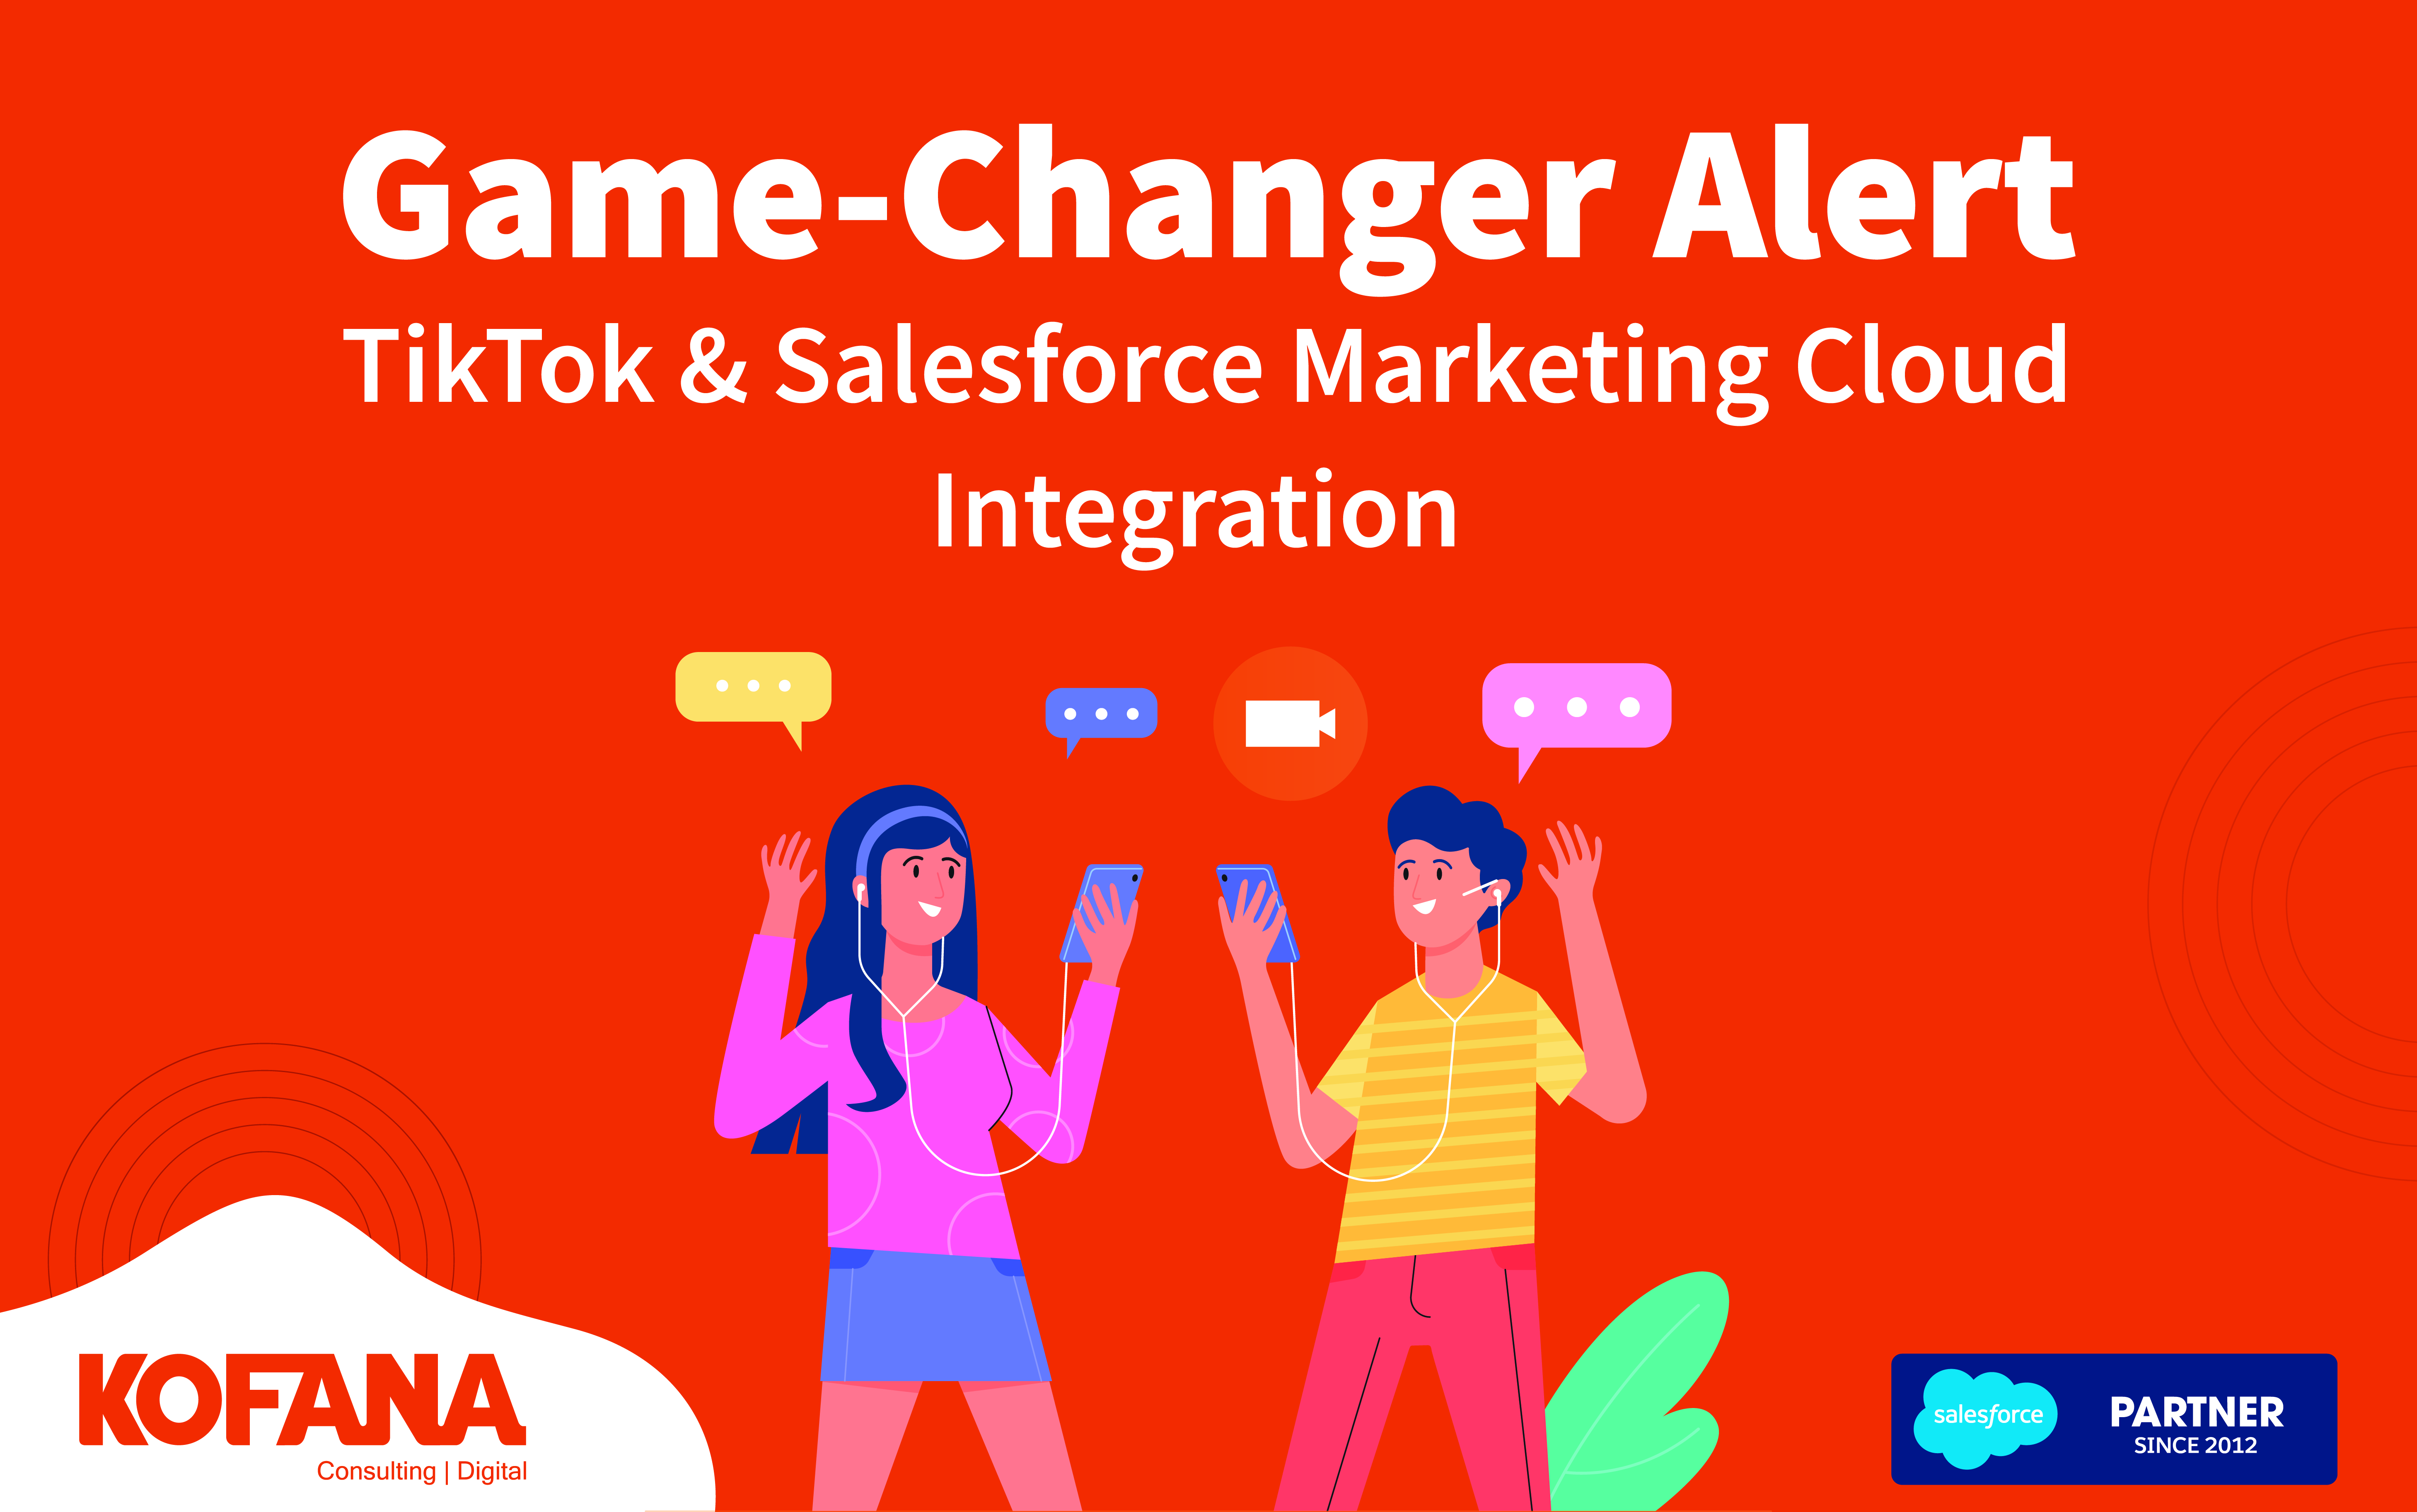 TikTok & Salesforce Marketing Cloud Integration